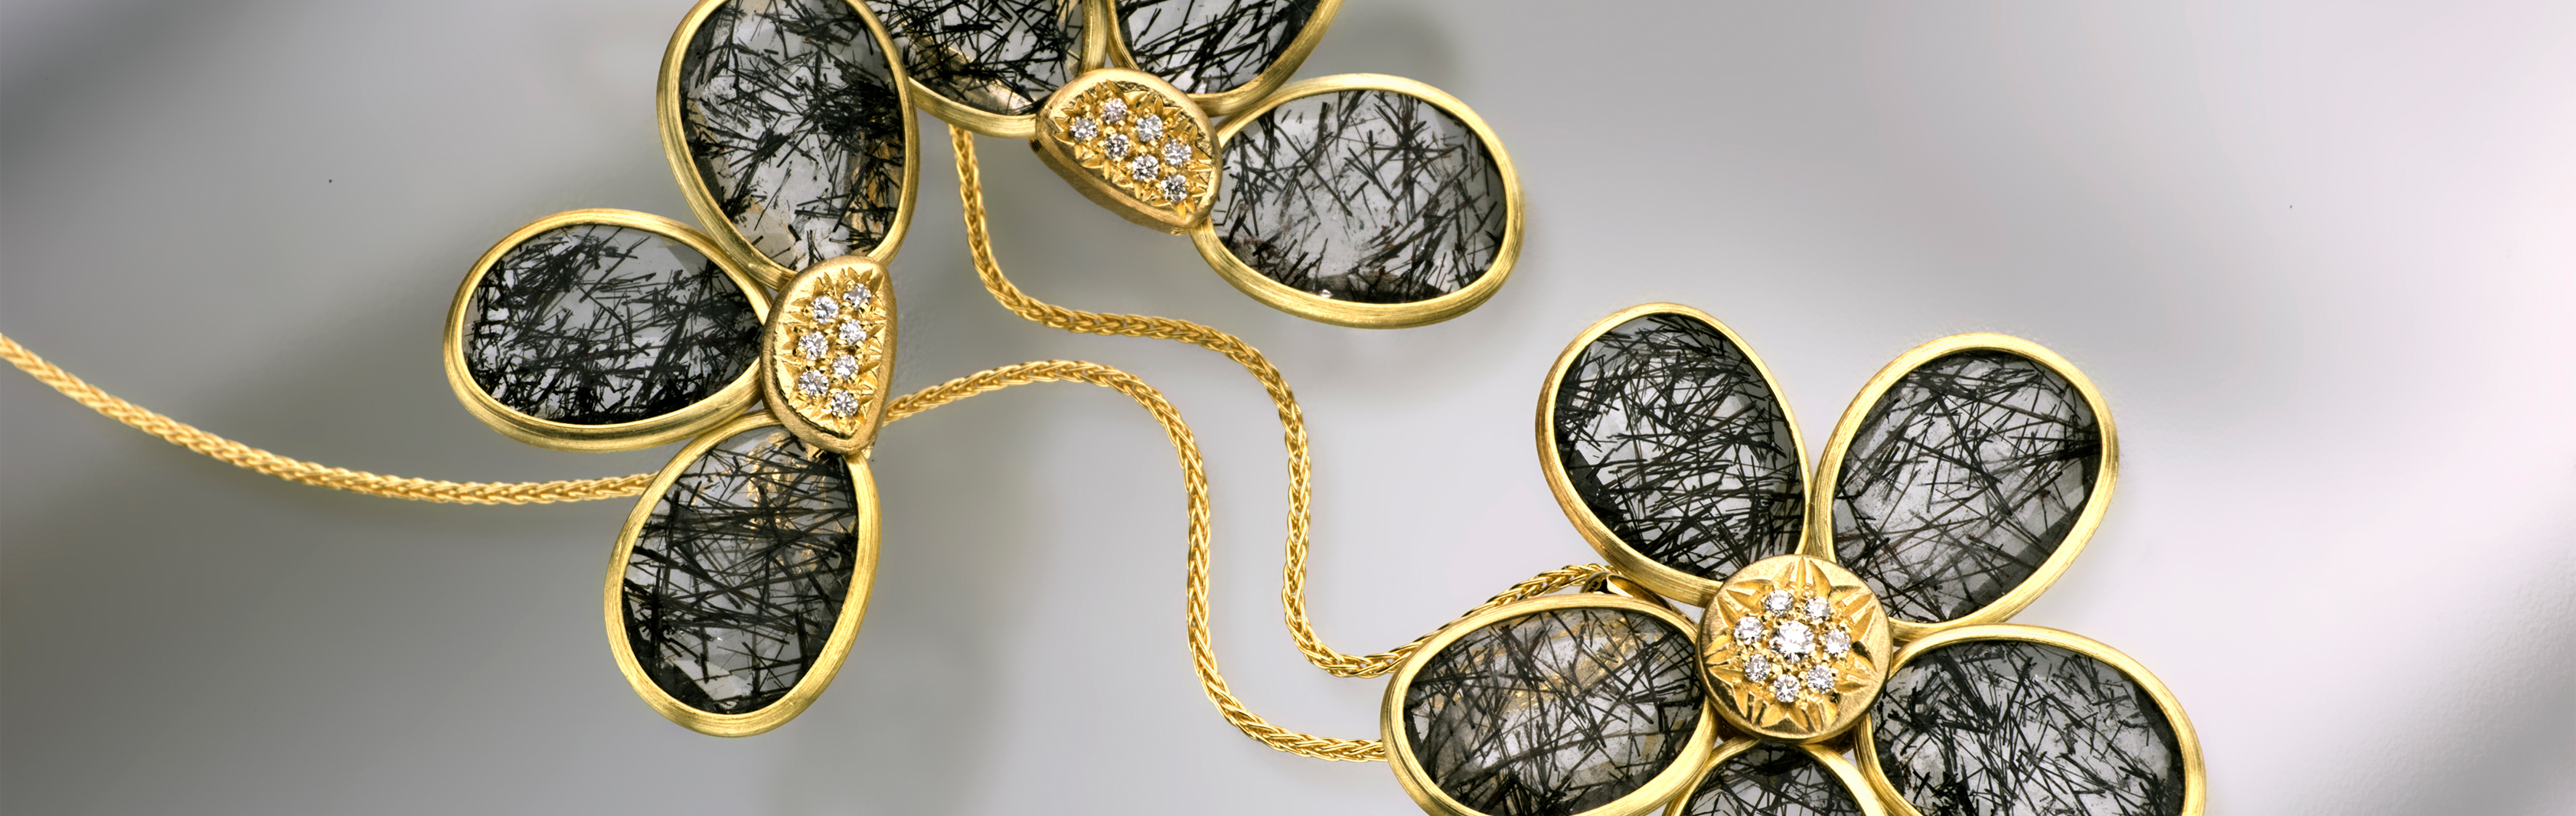 Black Flower Collection | 14K Gold Rutile Quartz and Diamond Jewelry